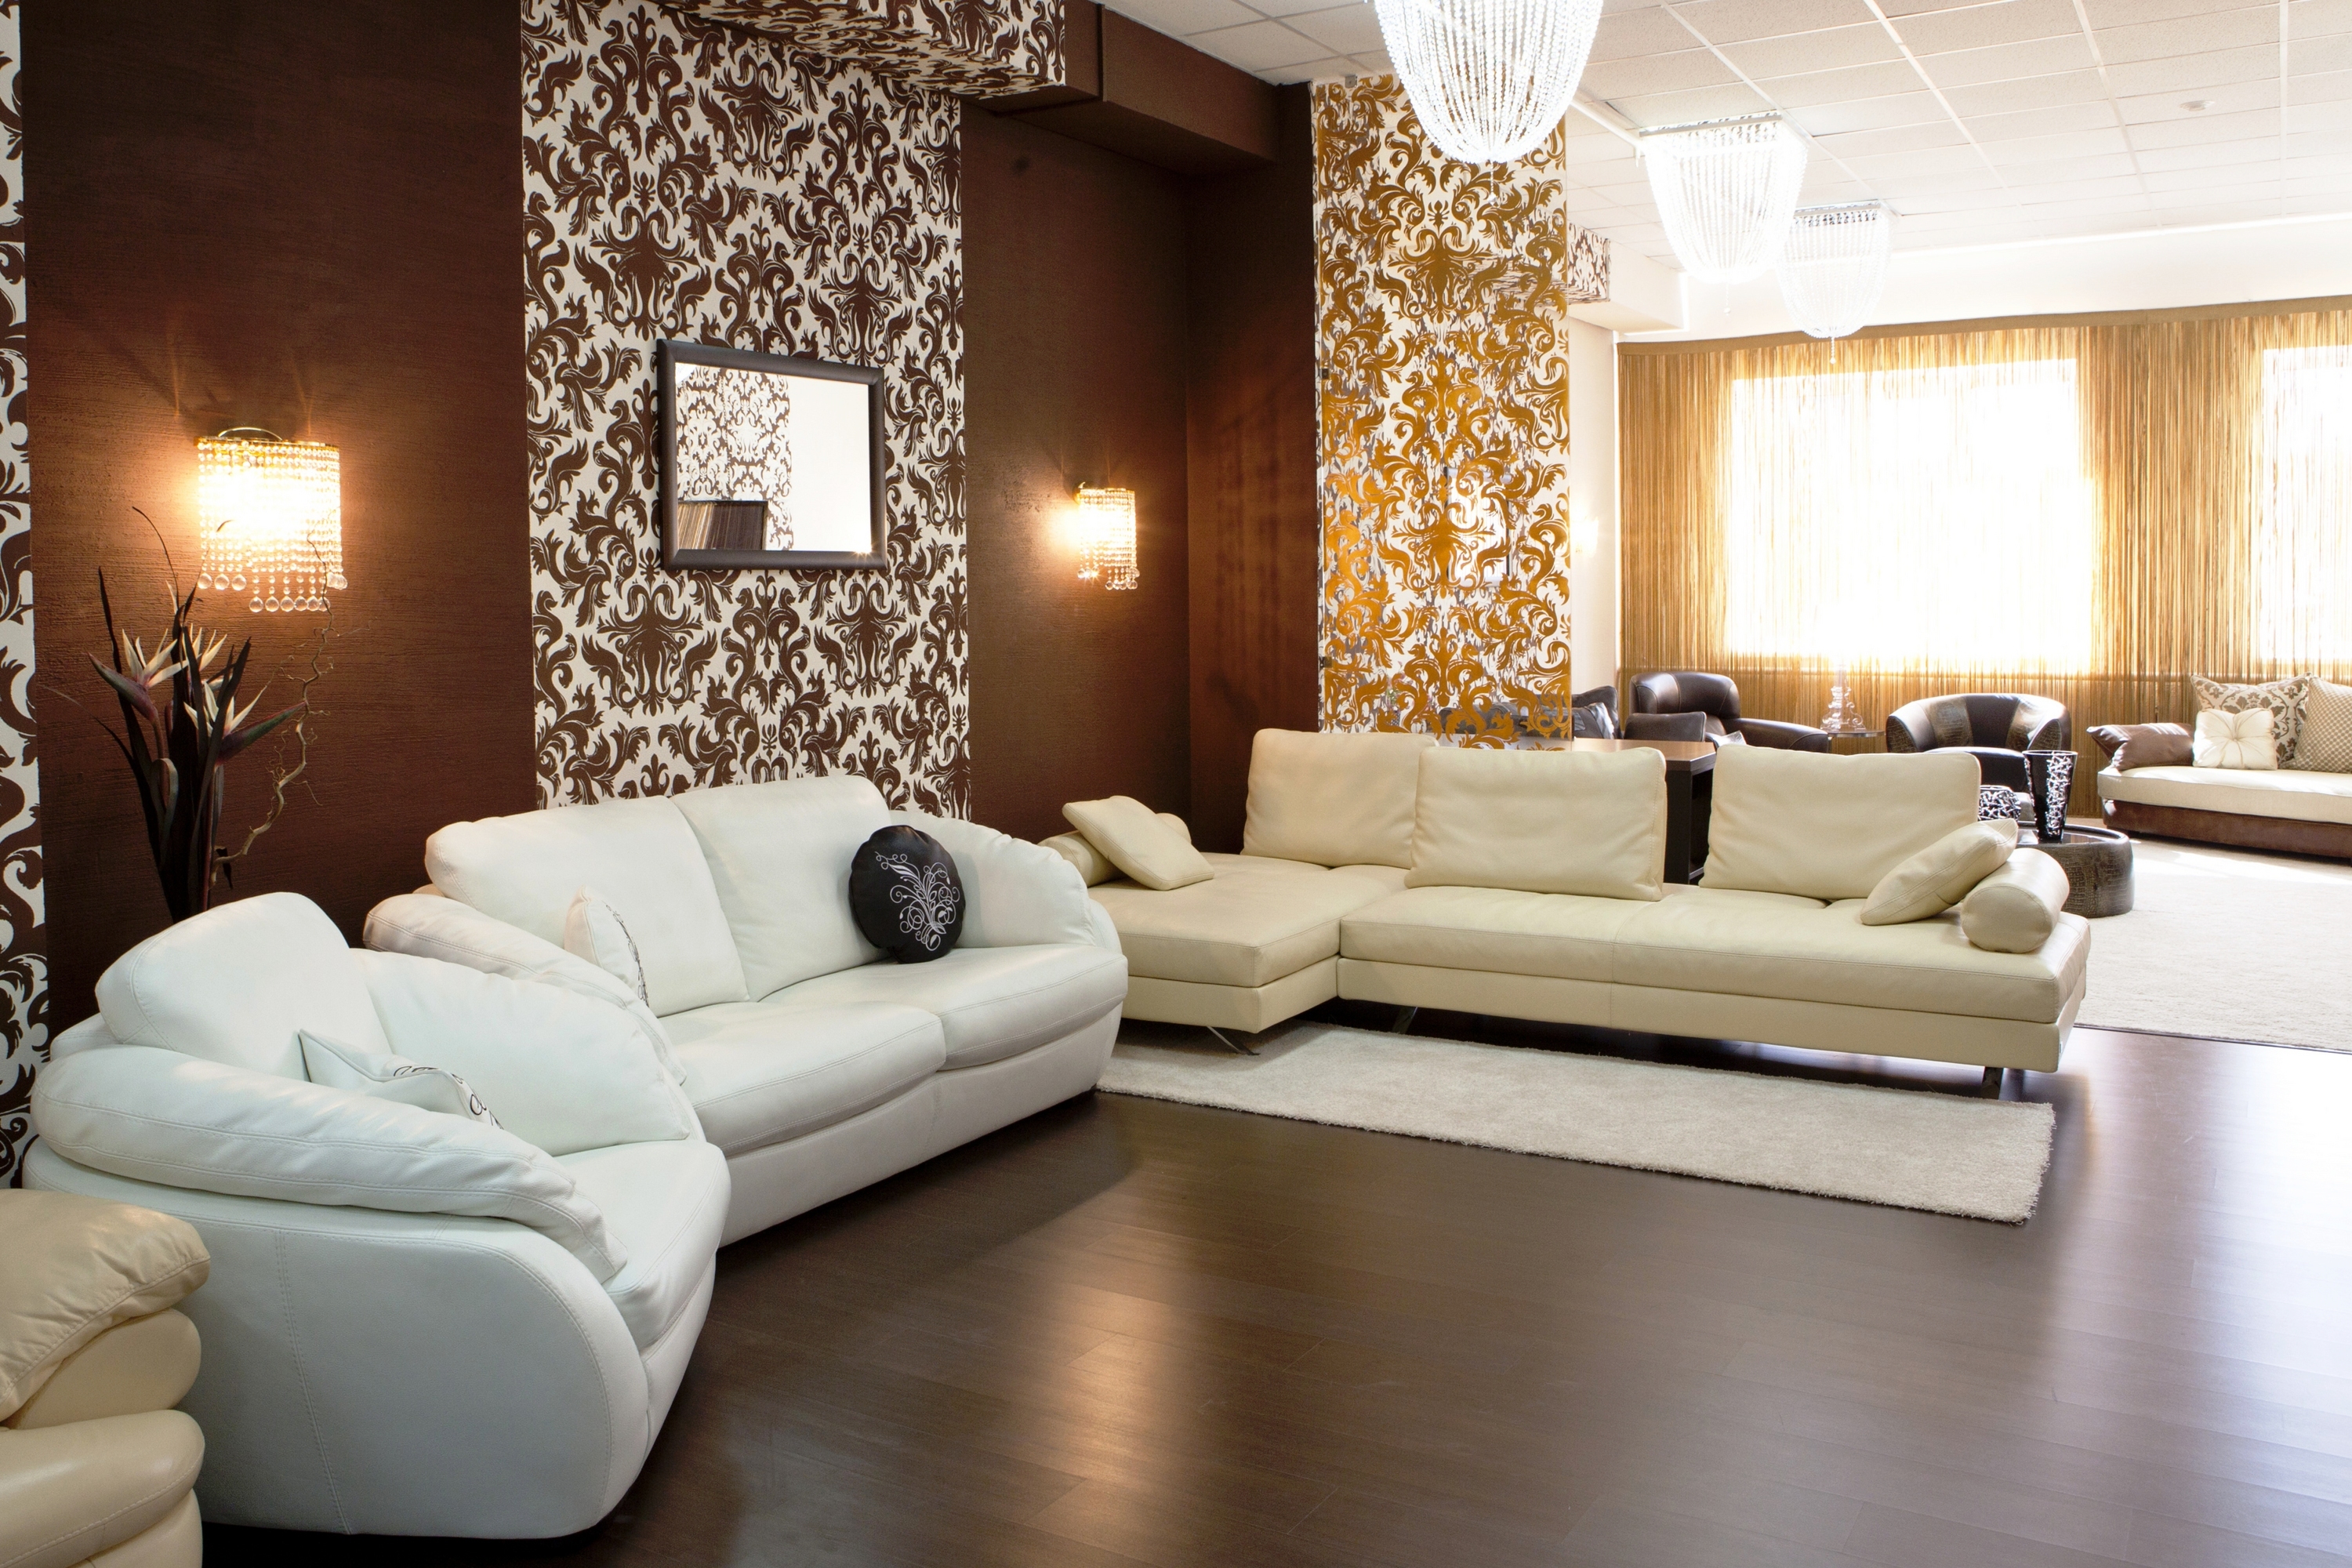 Интерьер квартиры с белорусской мебелью